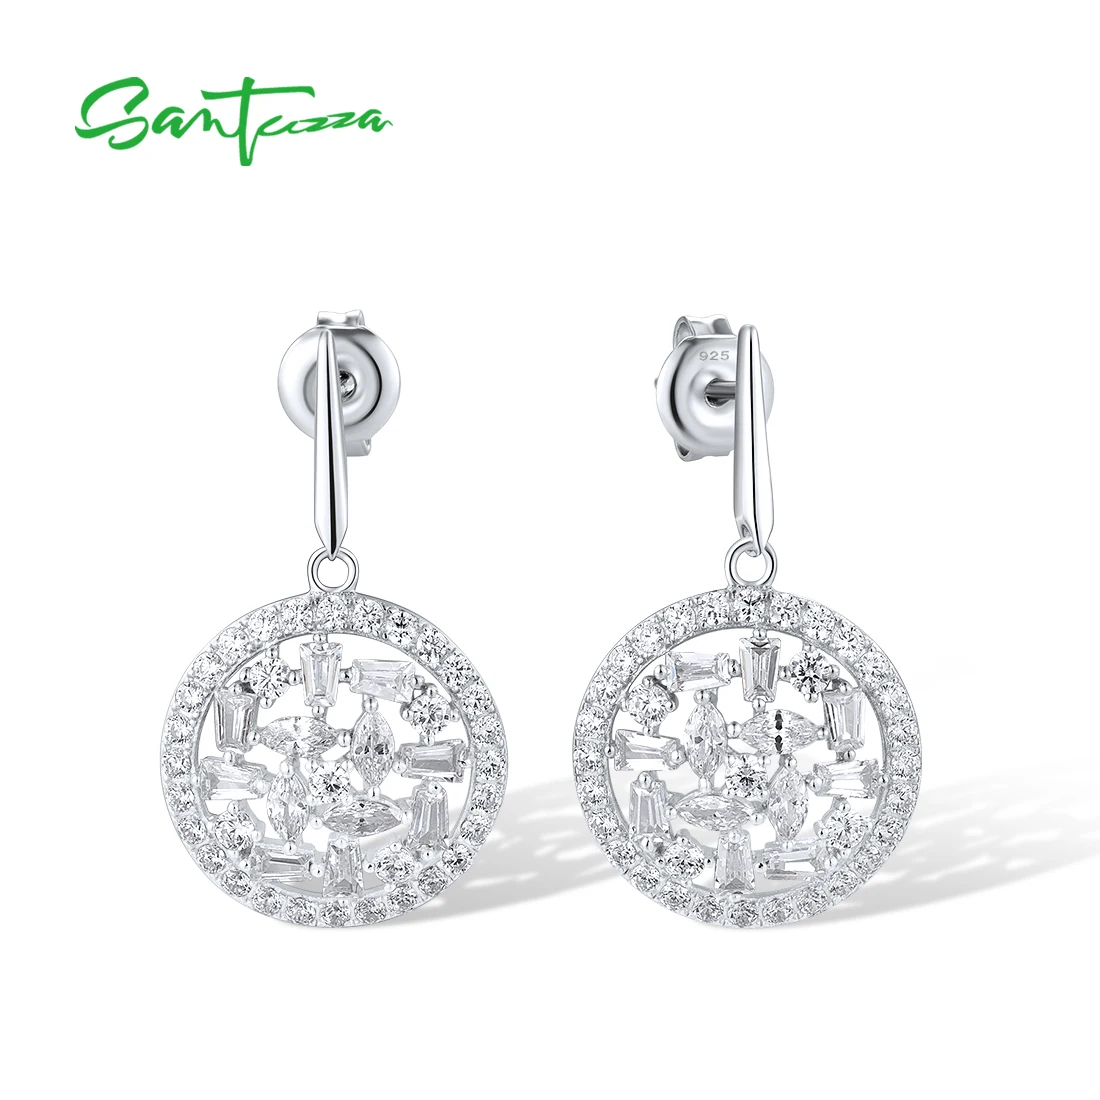 

SANTUZZA Authentic 925 Sterling Silver Drop Earrings For Women Sparkling White CZ Dangling Daily Wearing Elegant Fine Jewelry